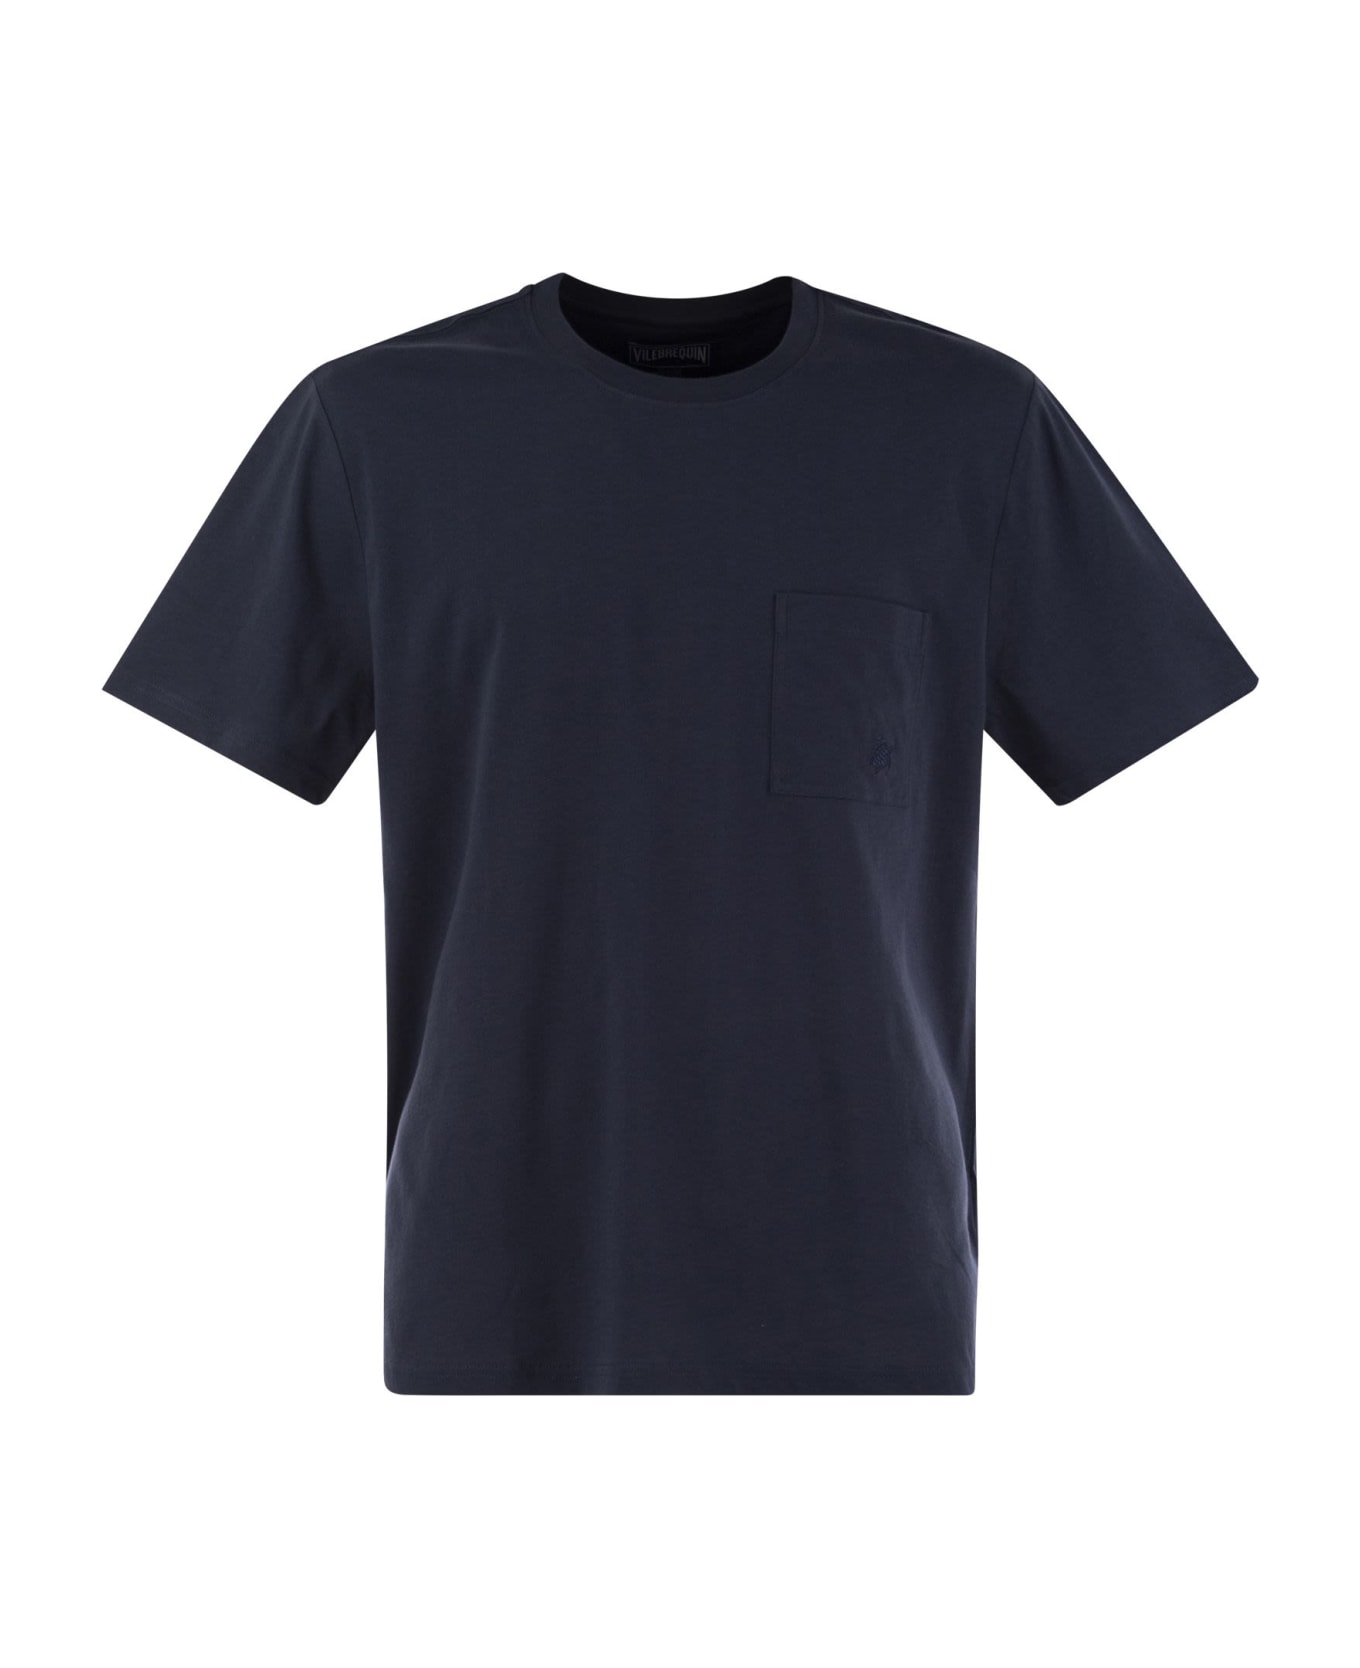 Vilebrequin Cotton T-shirt With Pocket - Marine Blue シャツ